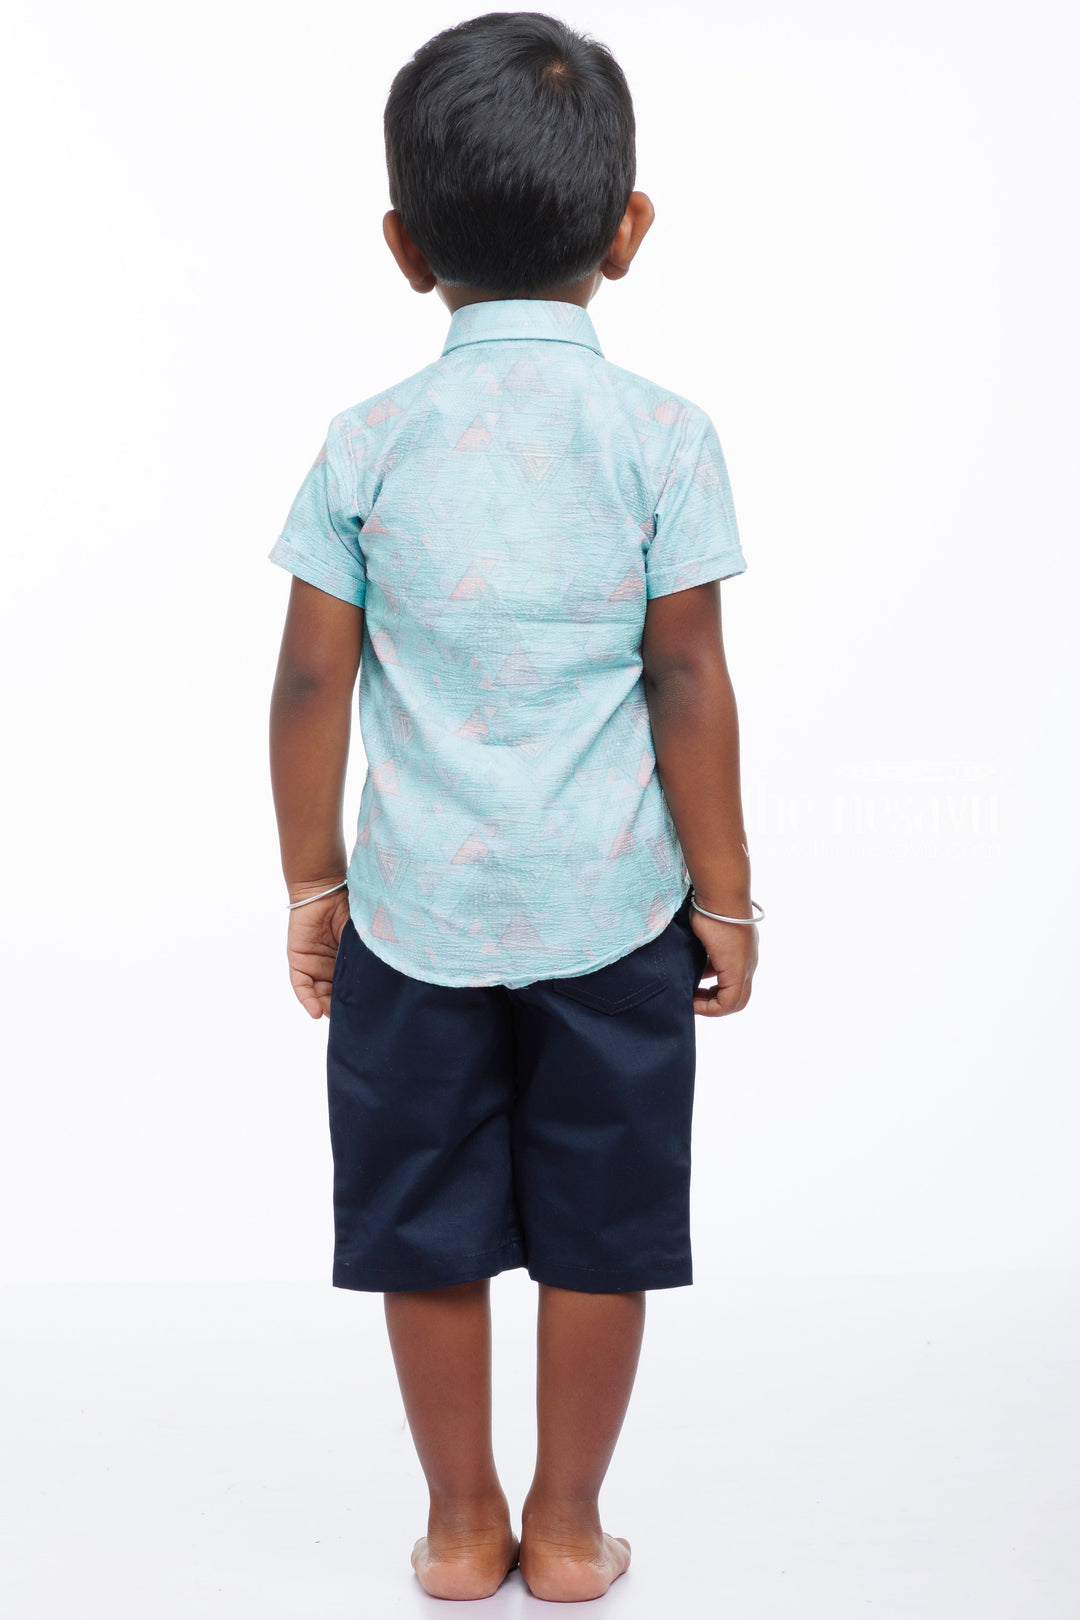 The Nesavu Boys Casual Set Tropical Breeze Boys Shirt and Shorts Combo Nesavu Shop Boys Pastel Print Shirt  Shorts Set | Casual Summer Wear for Kids | The Nesavu